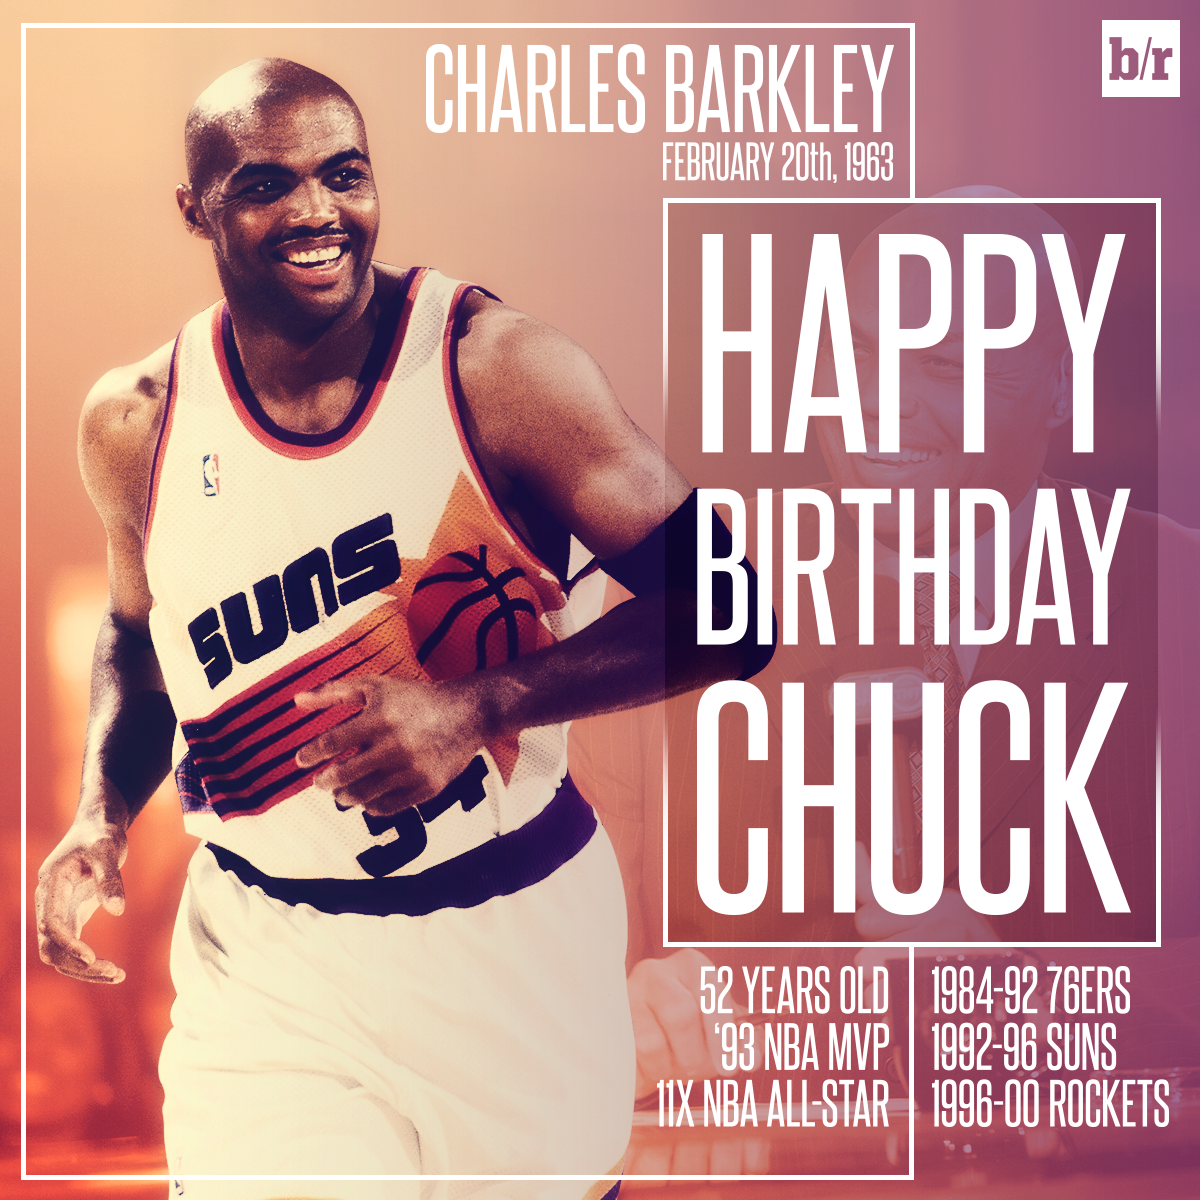  Happy birthday Chuck!  fuck Charles Barkley ole trash ass dude